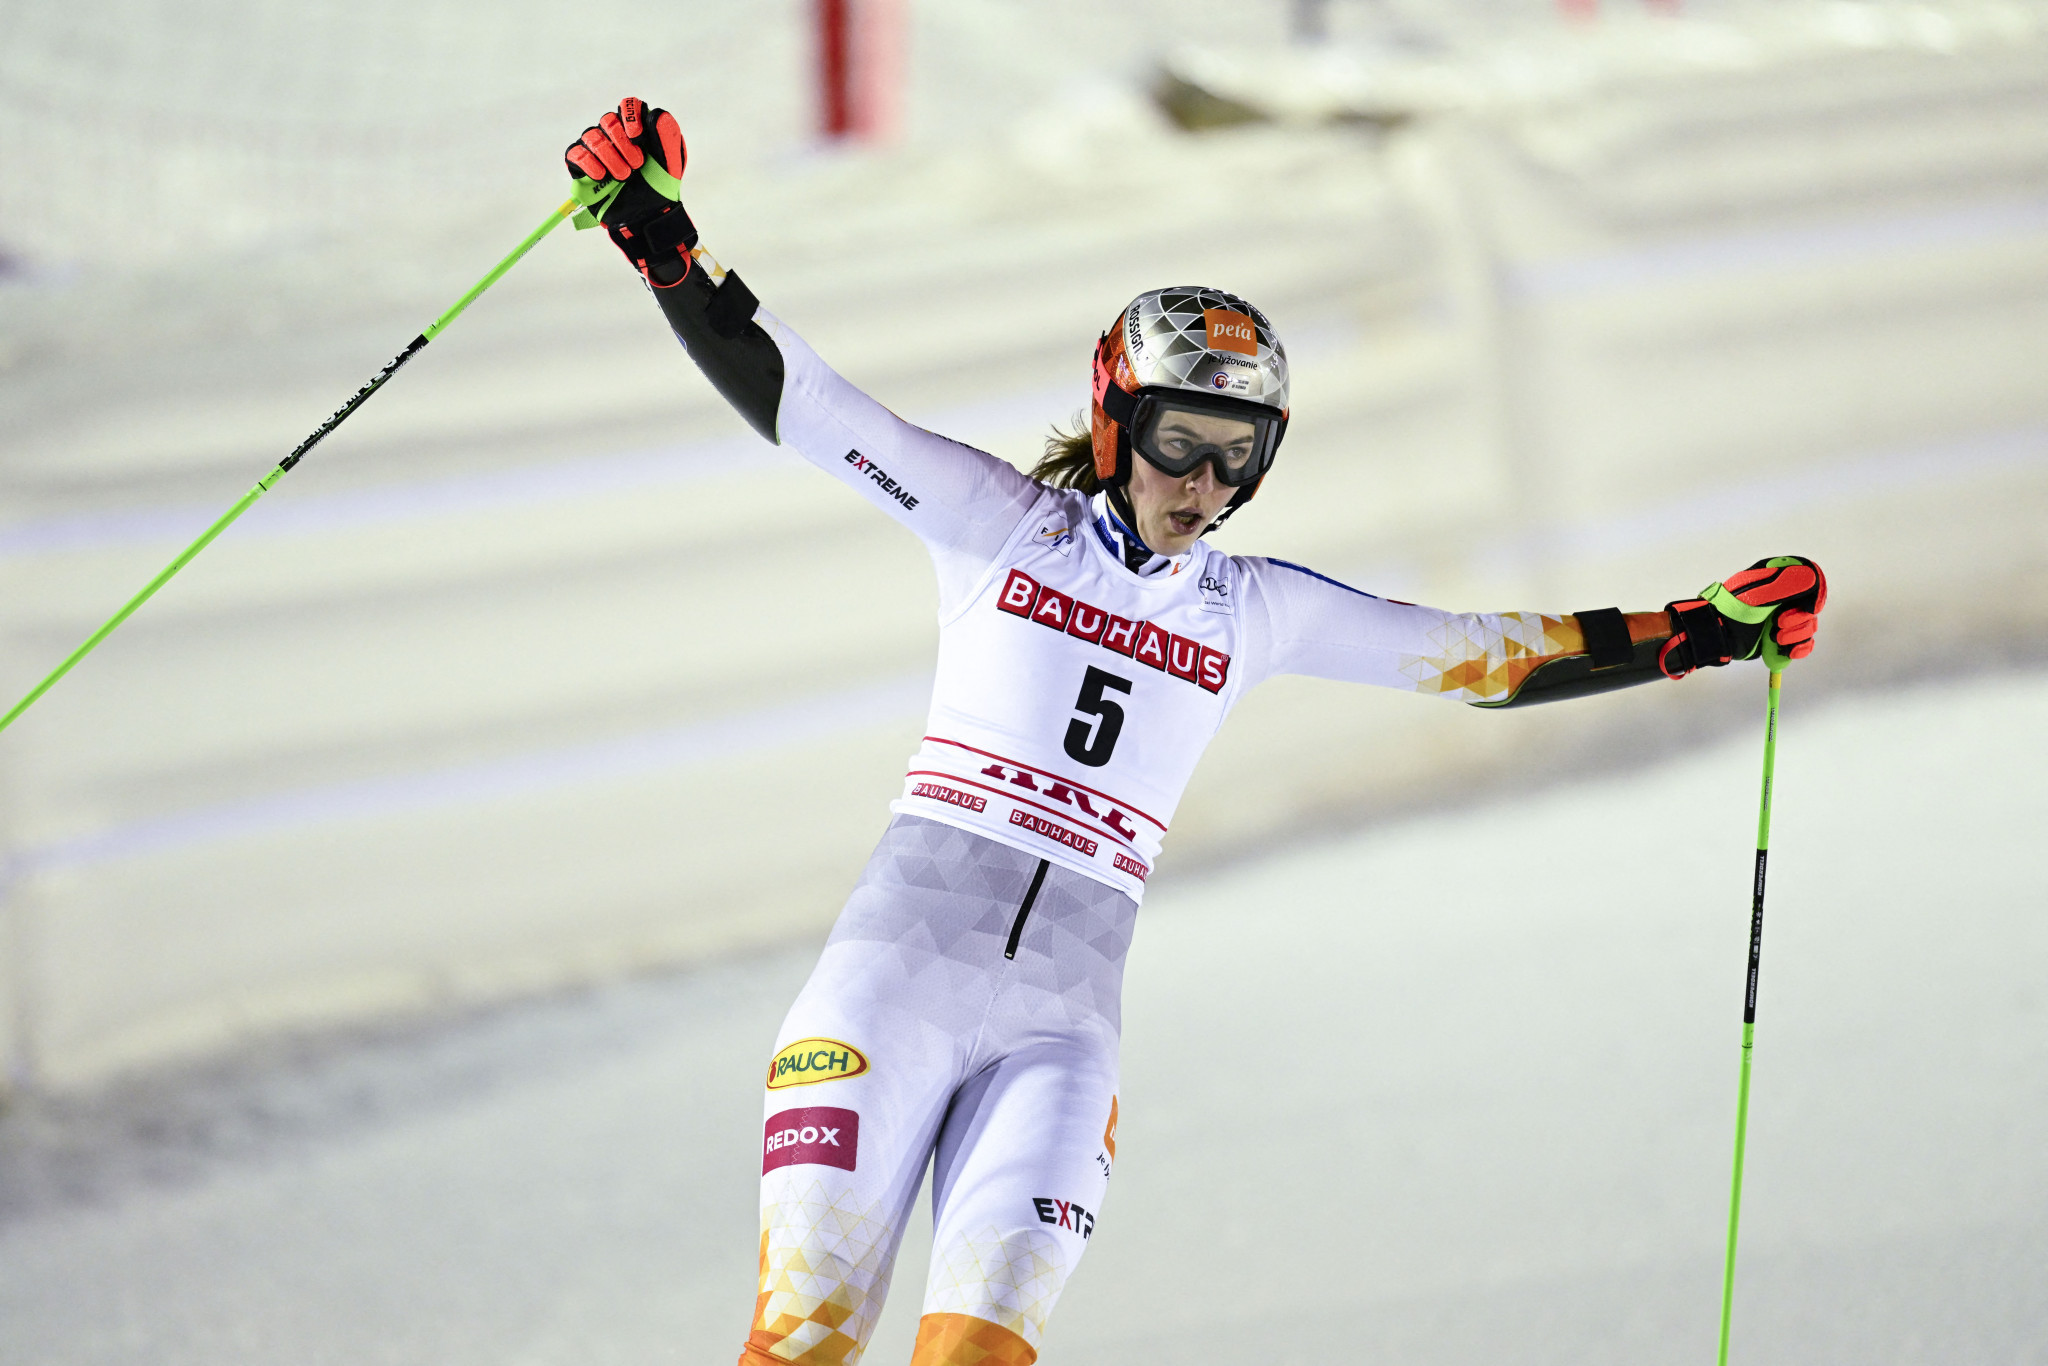 Vlhová wins giant slalom in Åre to reduce Shiffrin's Alpine Ski World Cup lead 